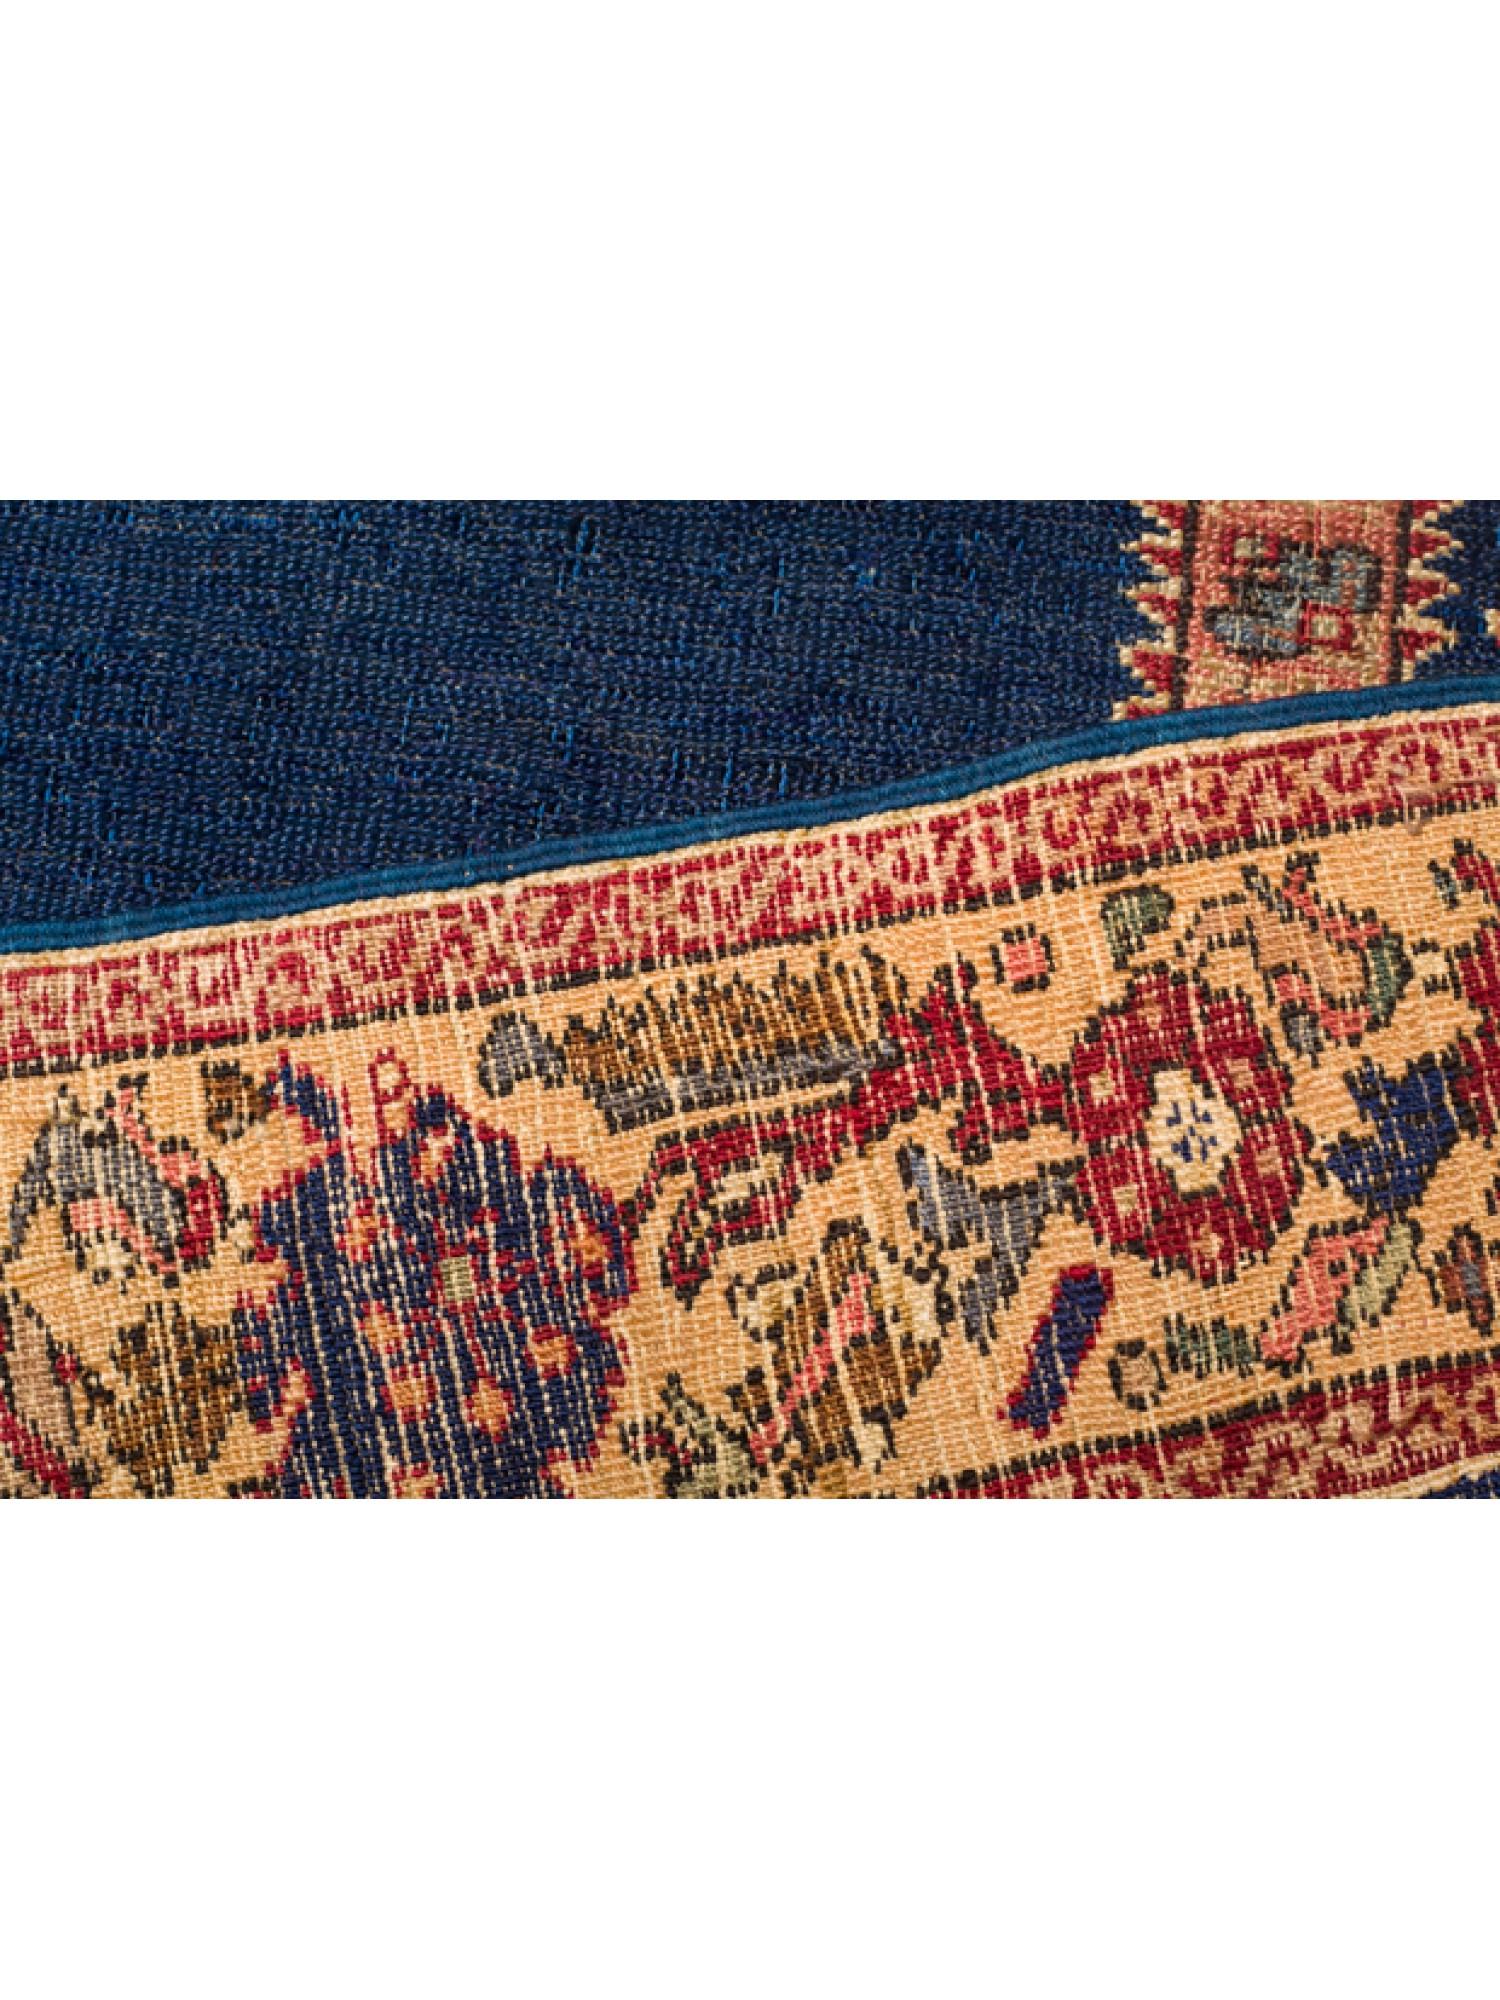 19th Century Antique Kula Prayer Rug Western Anatolian Turkish Mihrab Carpet Rare Design For Sale